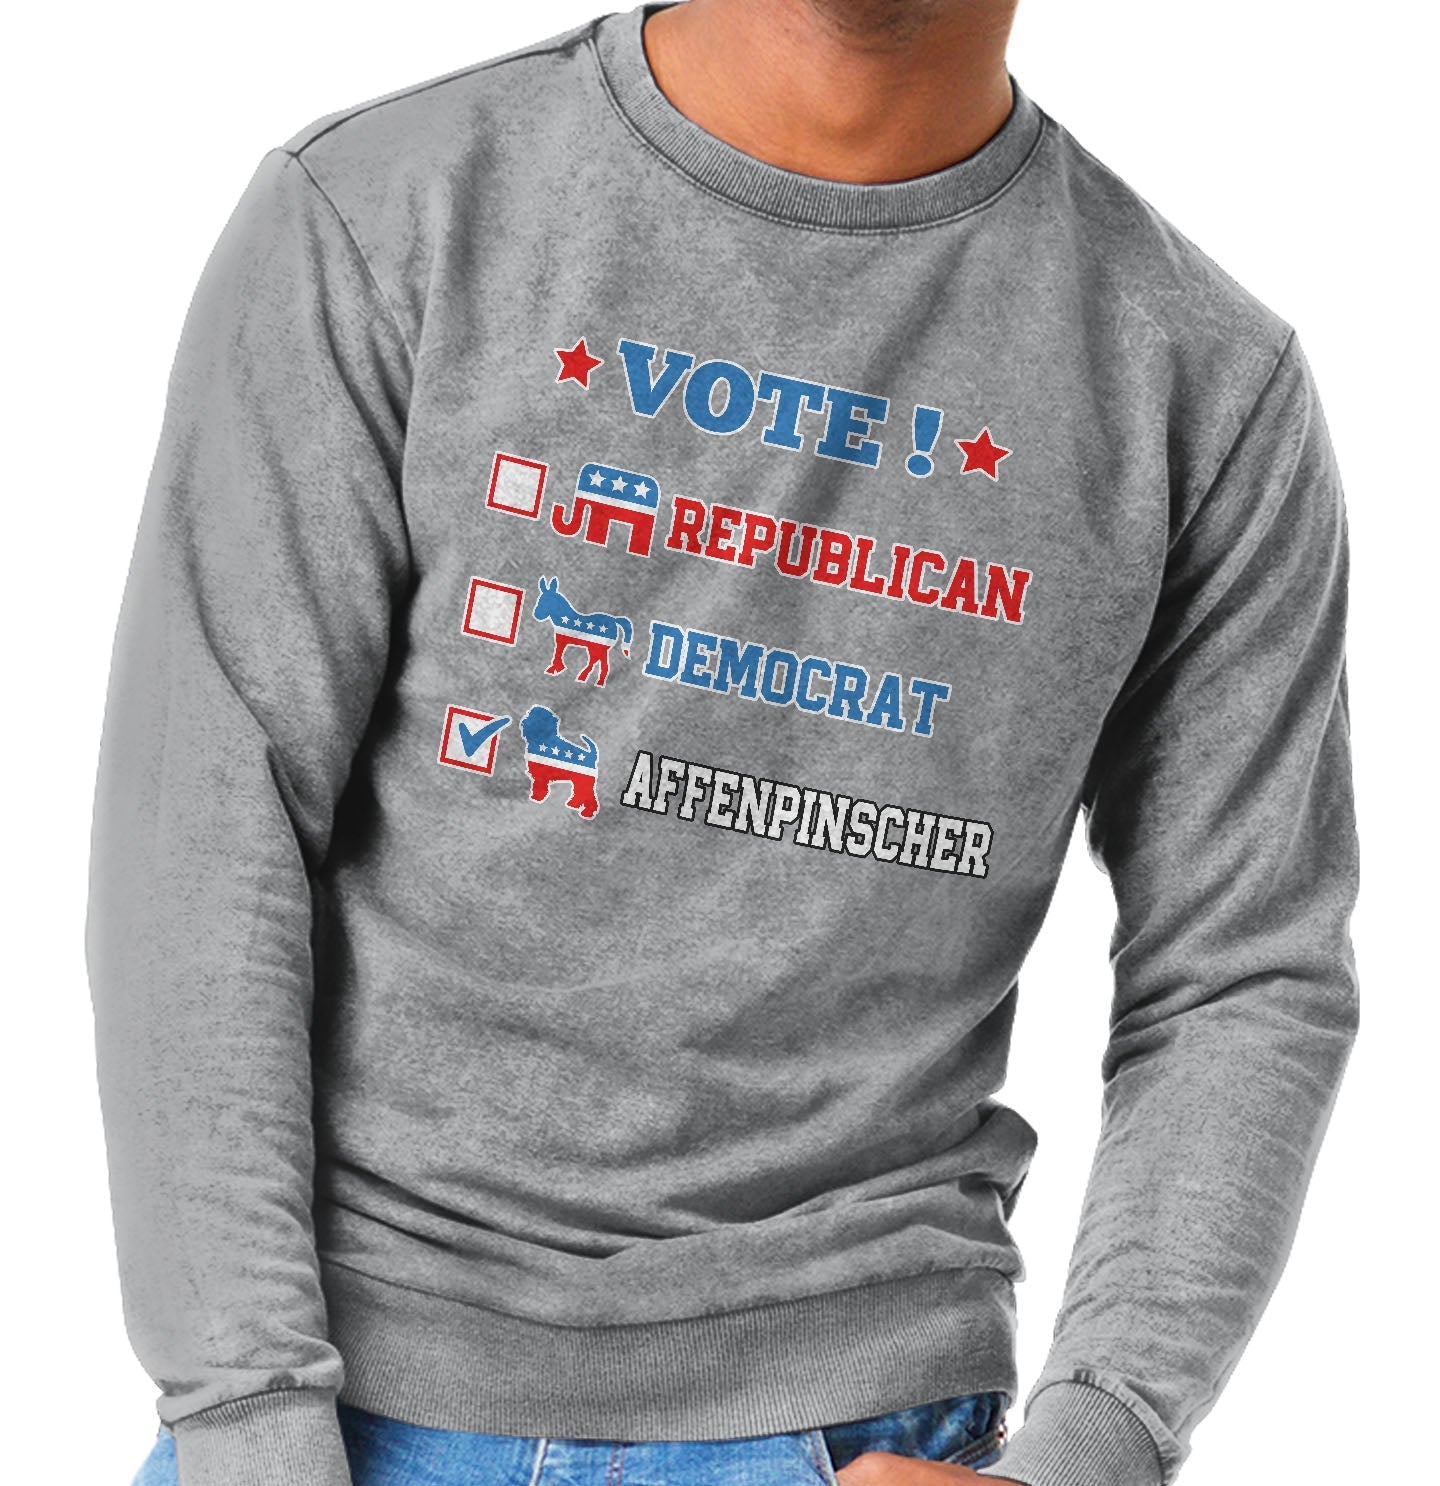 Vote for the Dog - Personalized Custom Adult Unisex Crewneck Sweatshirt